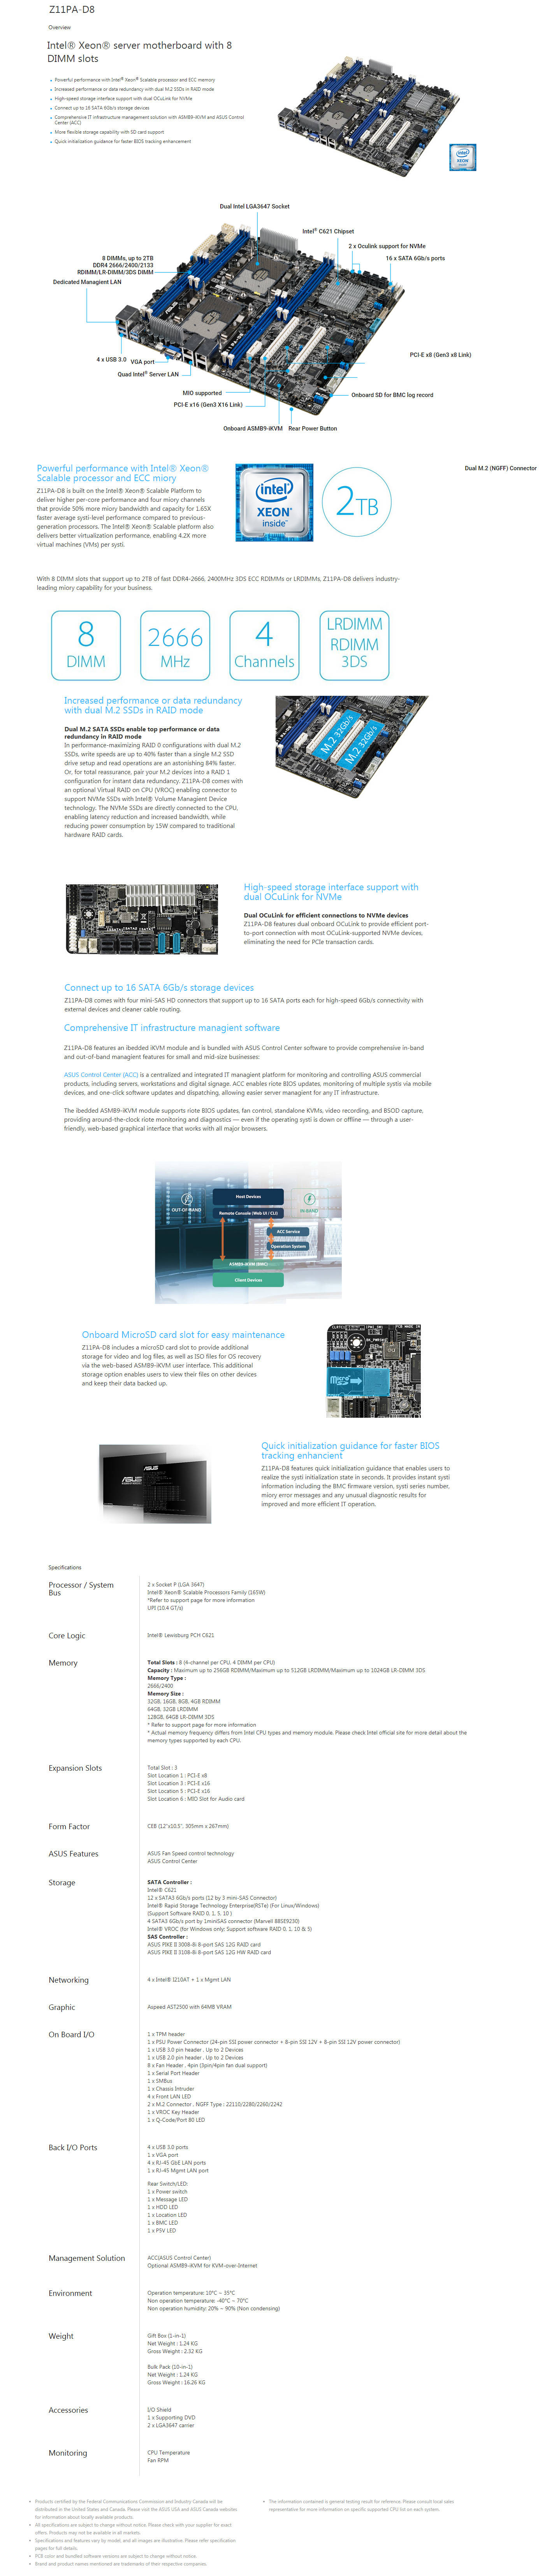  Buy Online Asus Z11PA-D8 Intel Server Motherboard